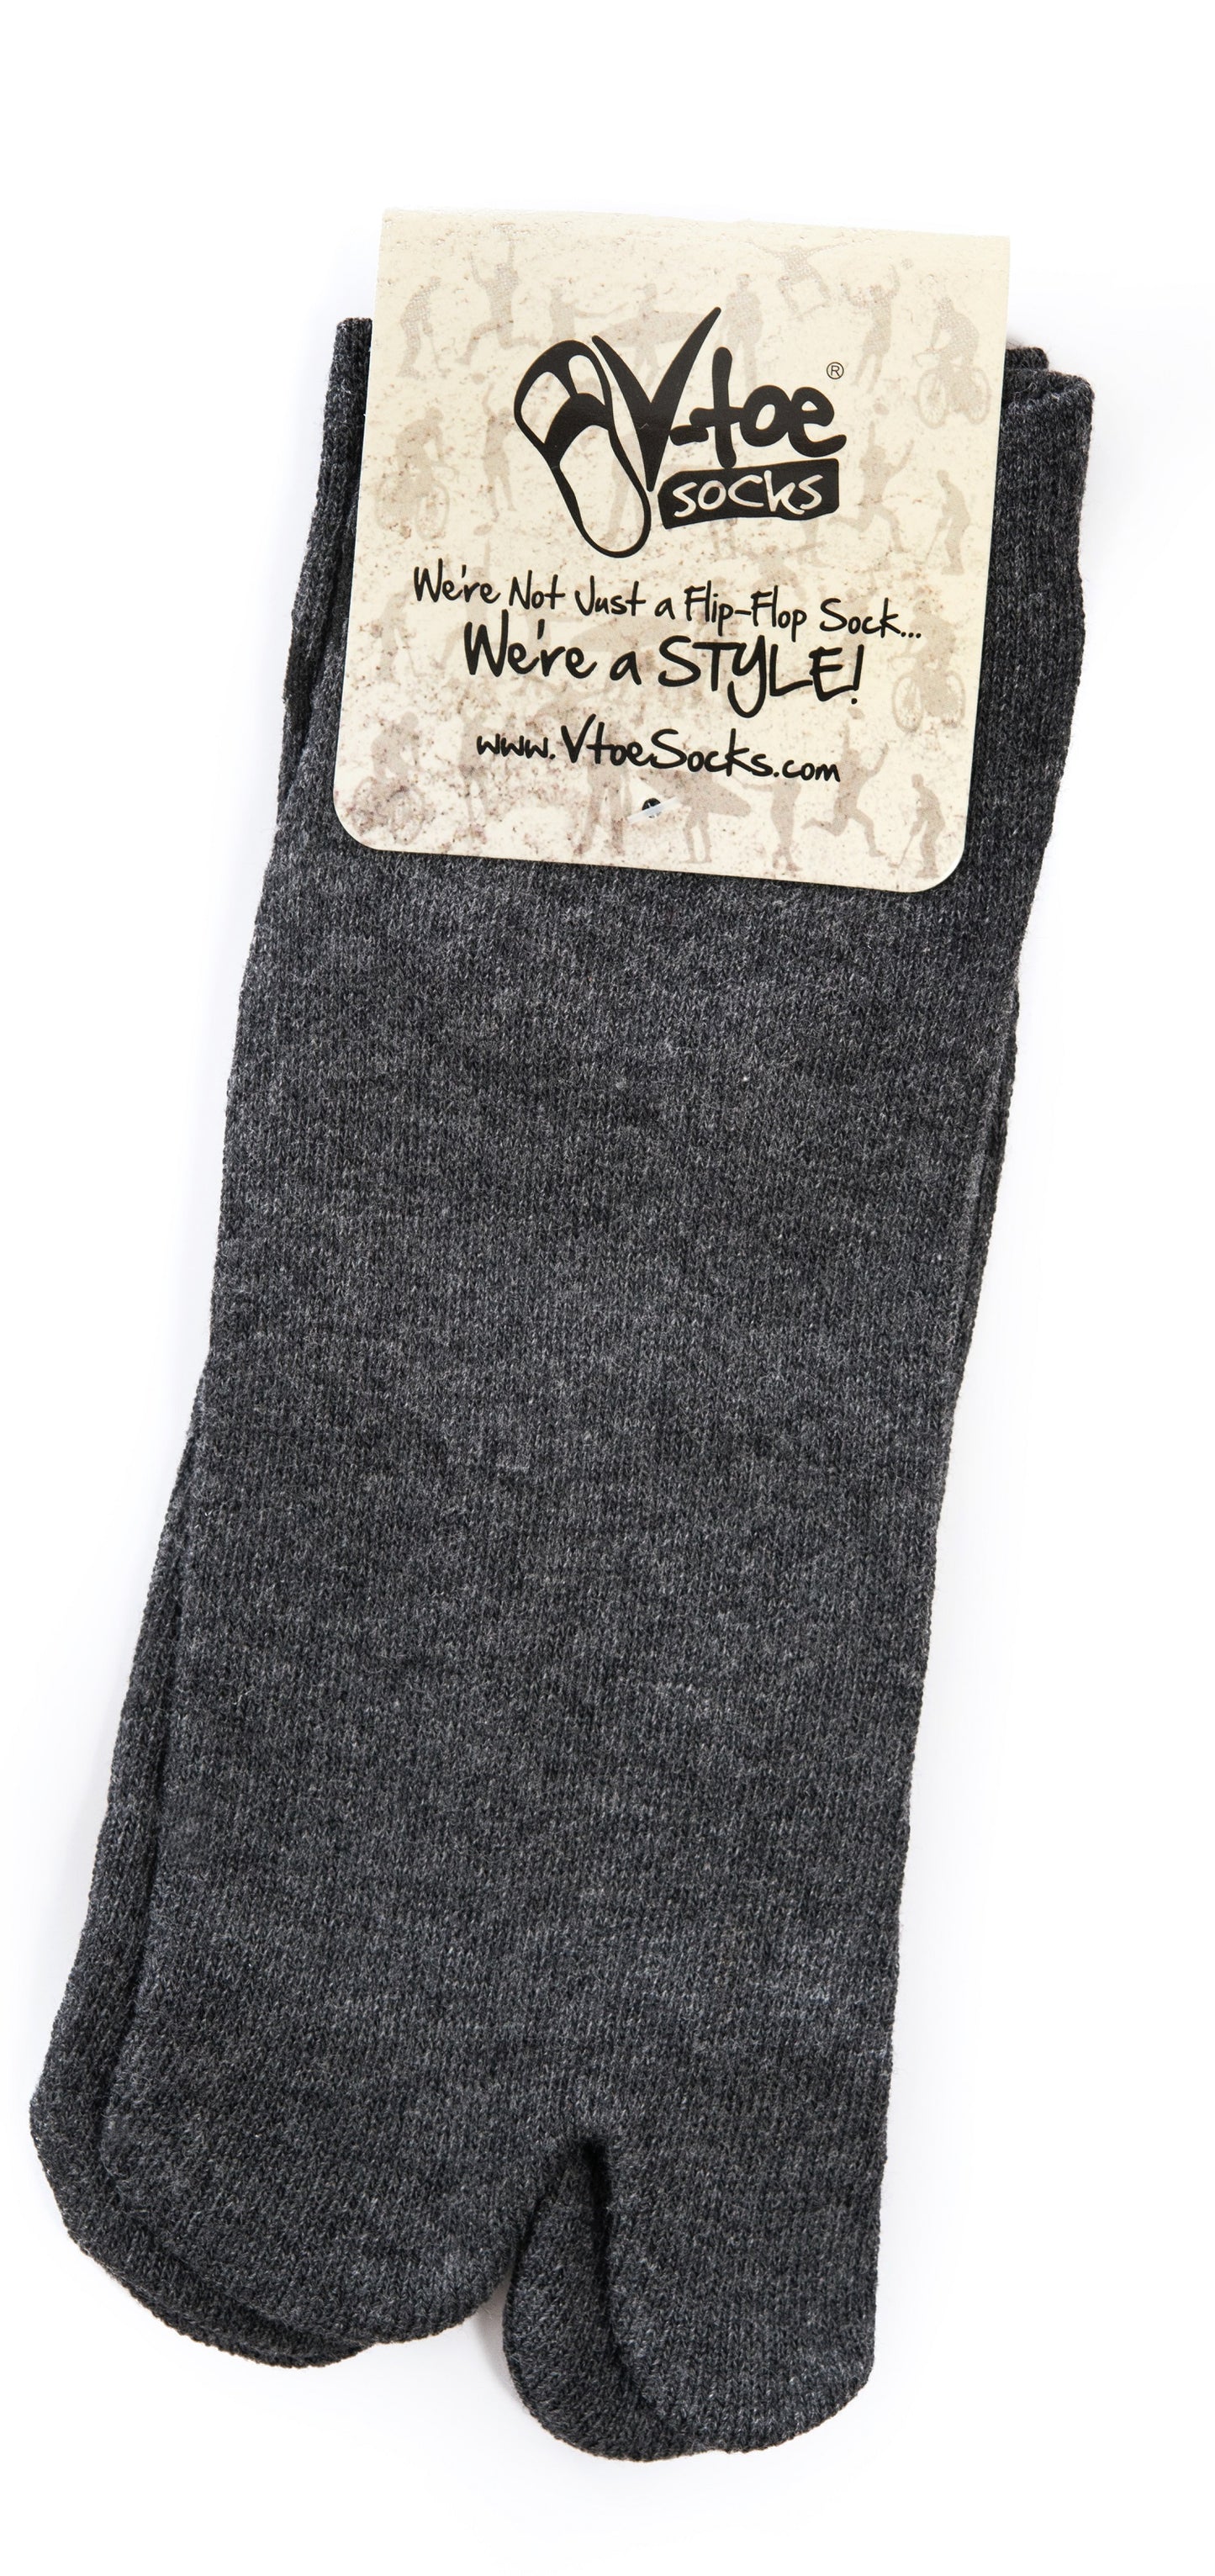 Gunmetal Grey Ankle Casual V-Toe Flip-Flop Tabi Big Toe Socks